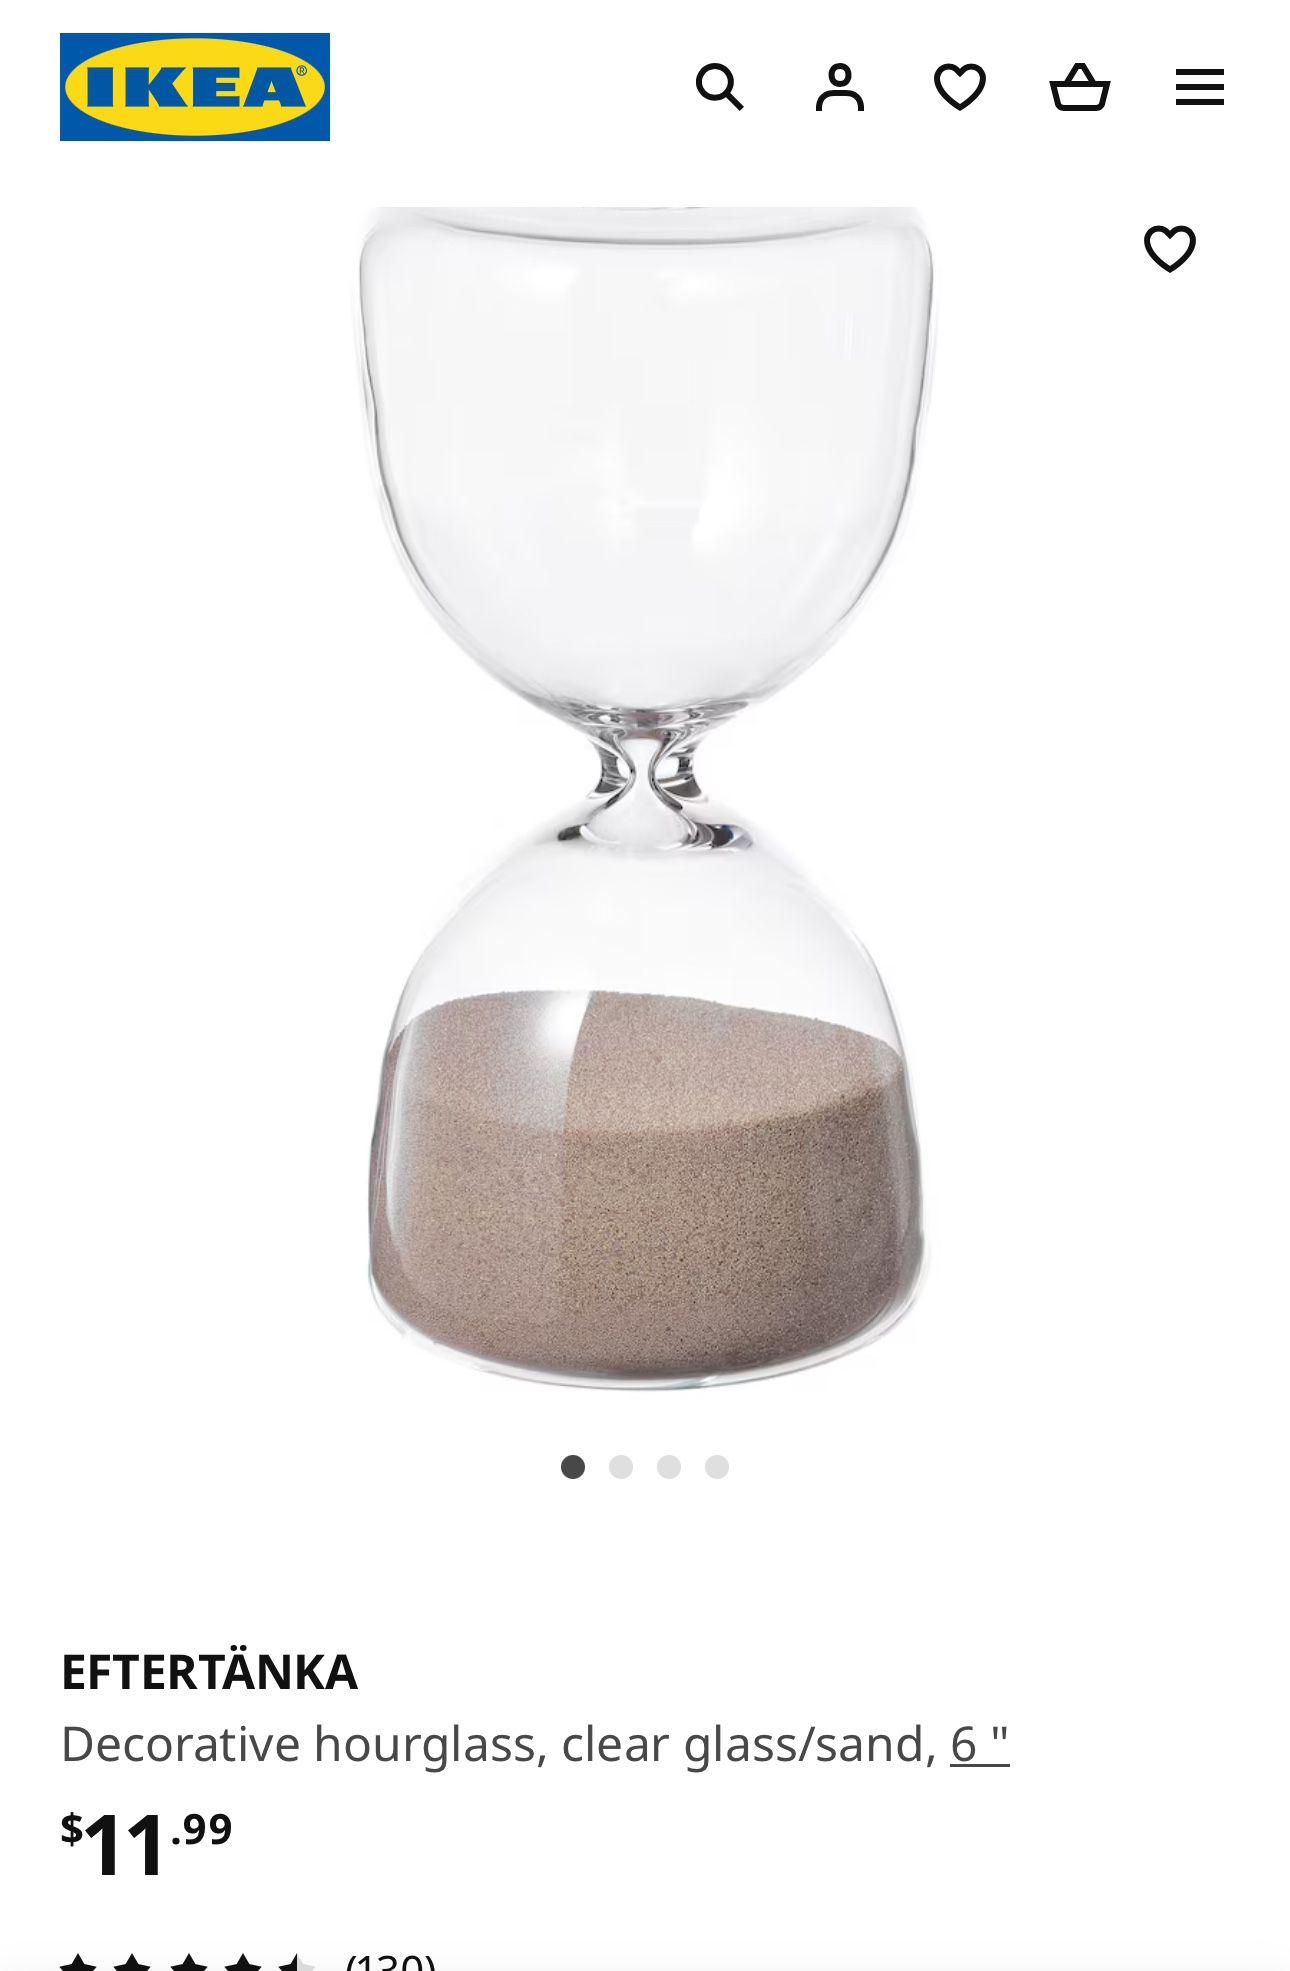 Decorative hourglass, clear glass/sand, 6 "